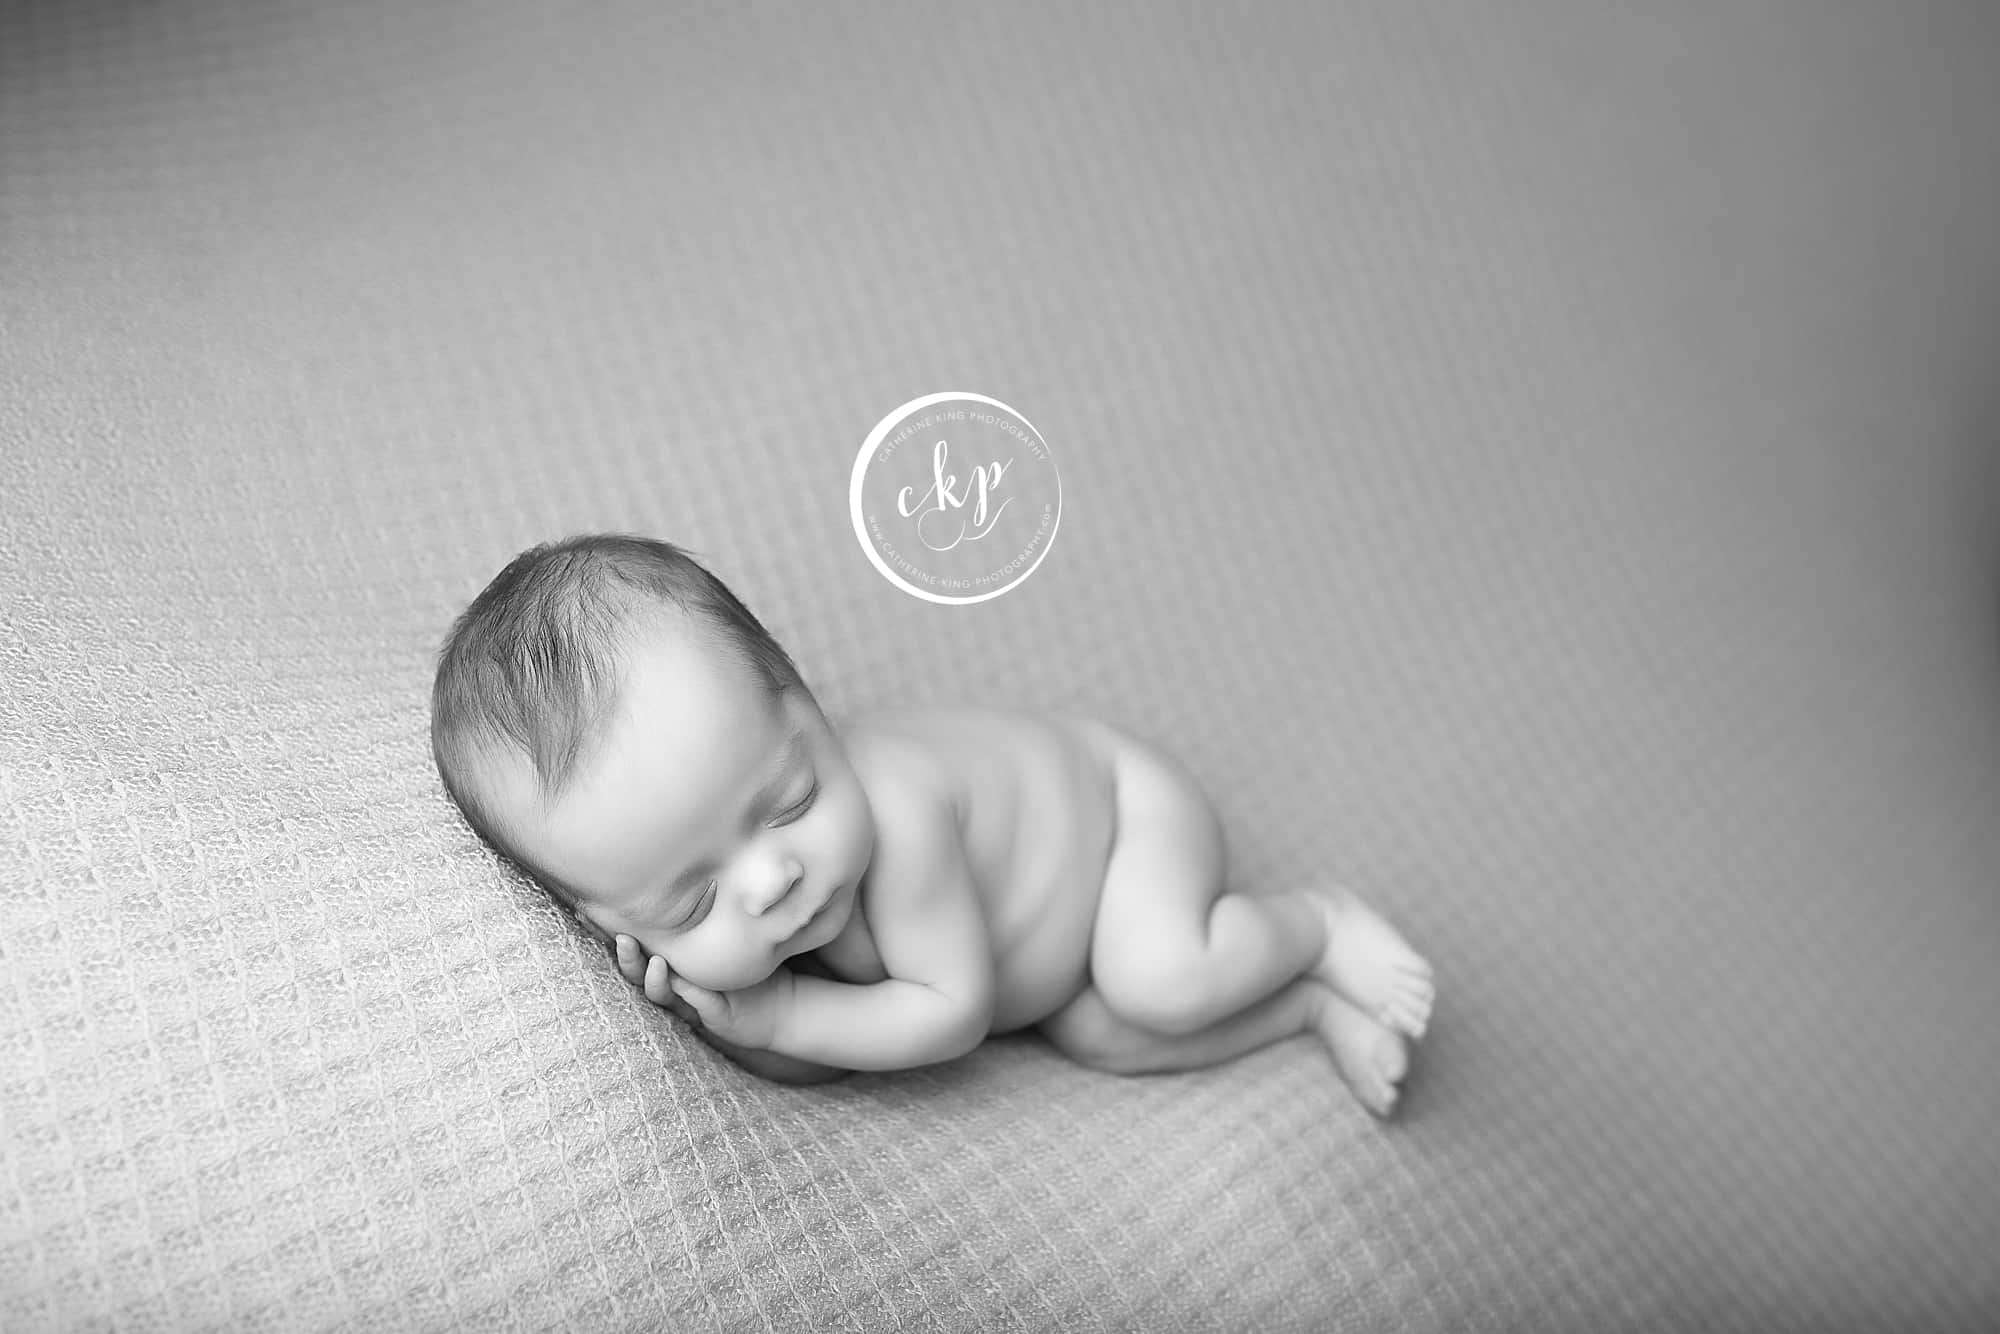 madison ct newborn photography session with reagan